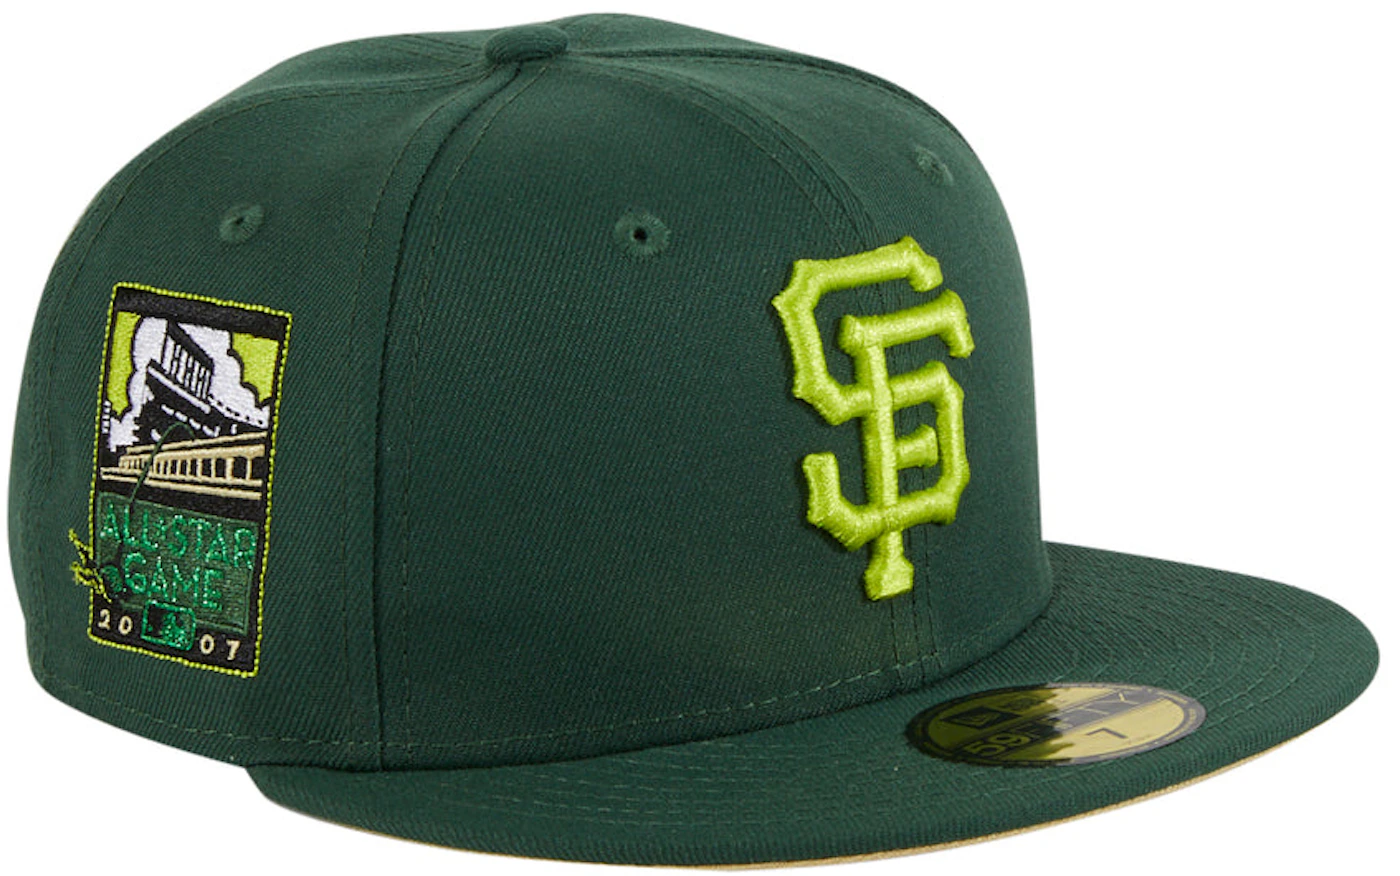  San Francisco Giants Hat